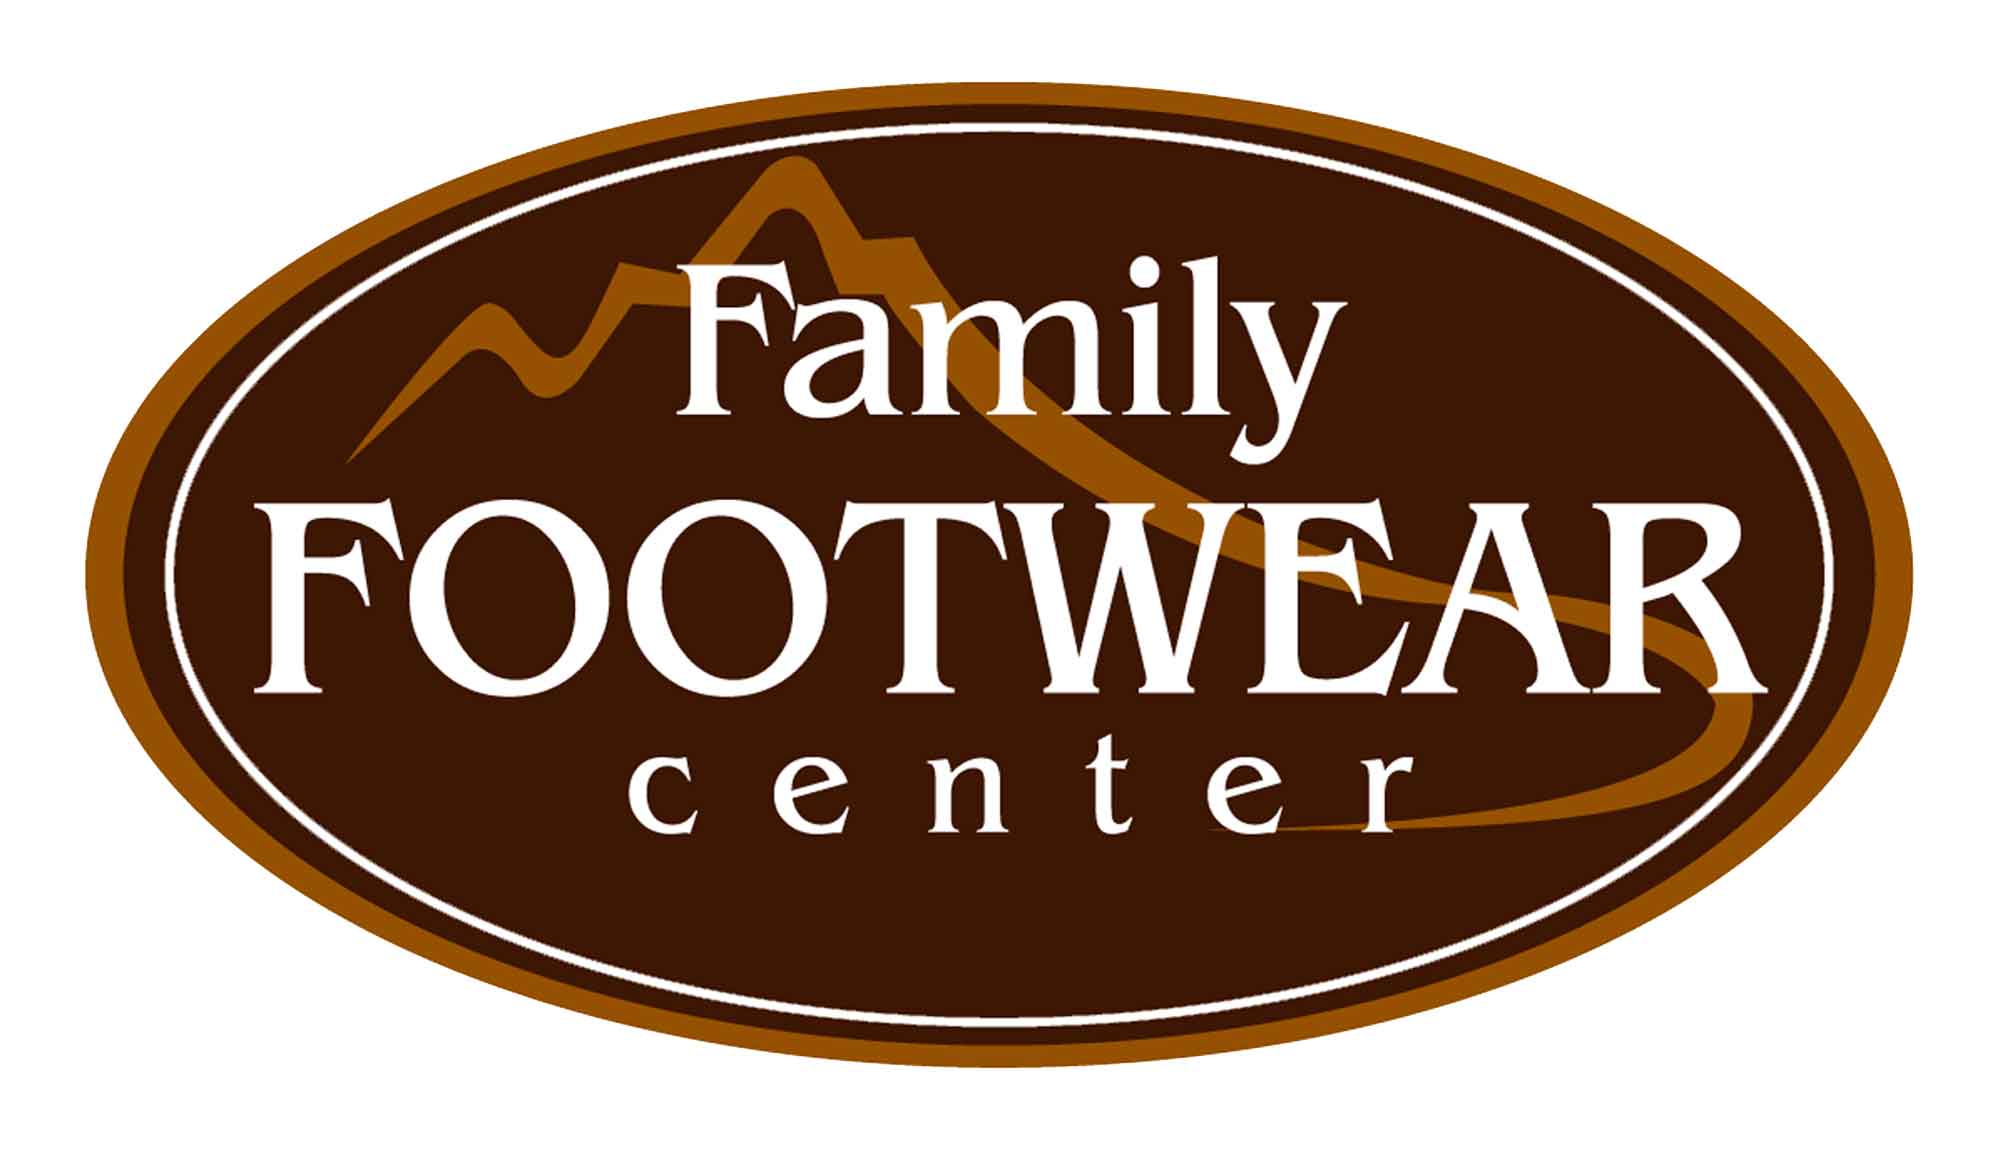 Family Foowear Center Fits You Best!